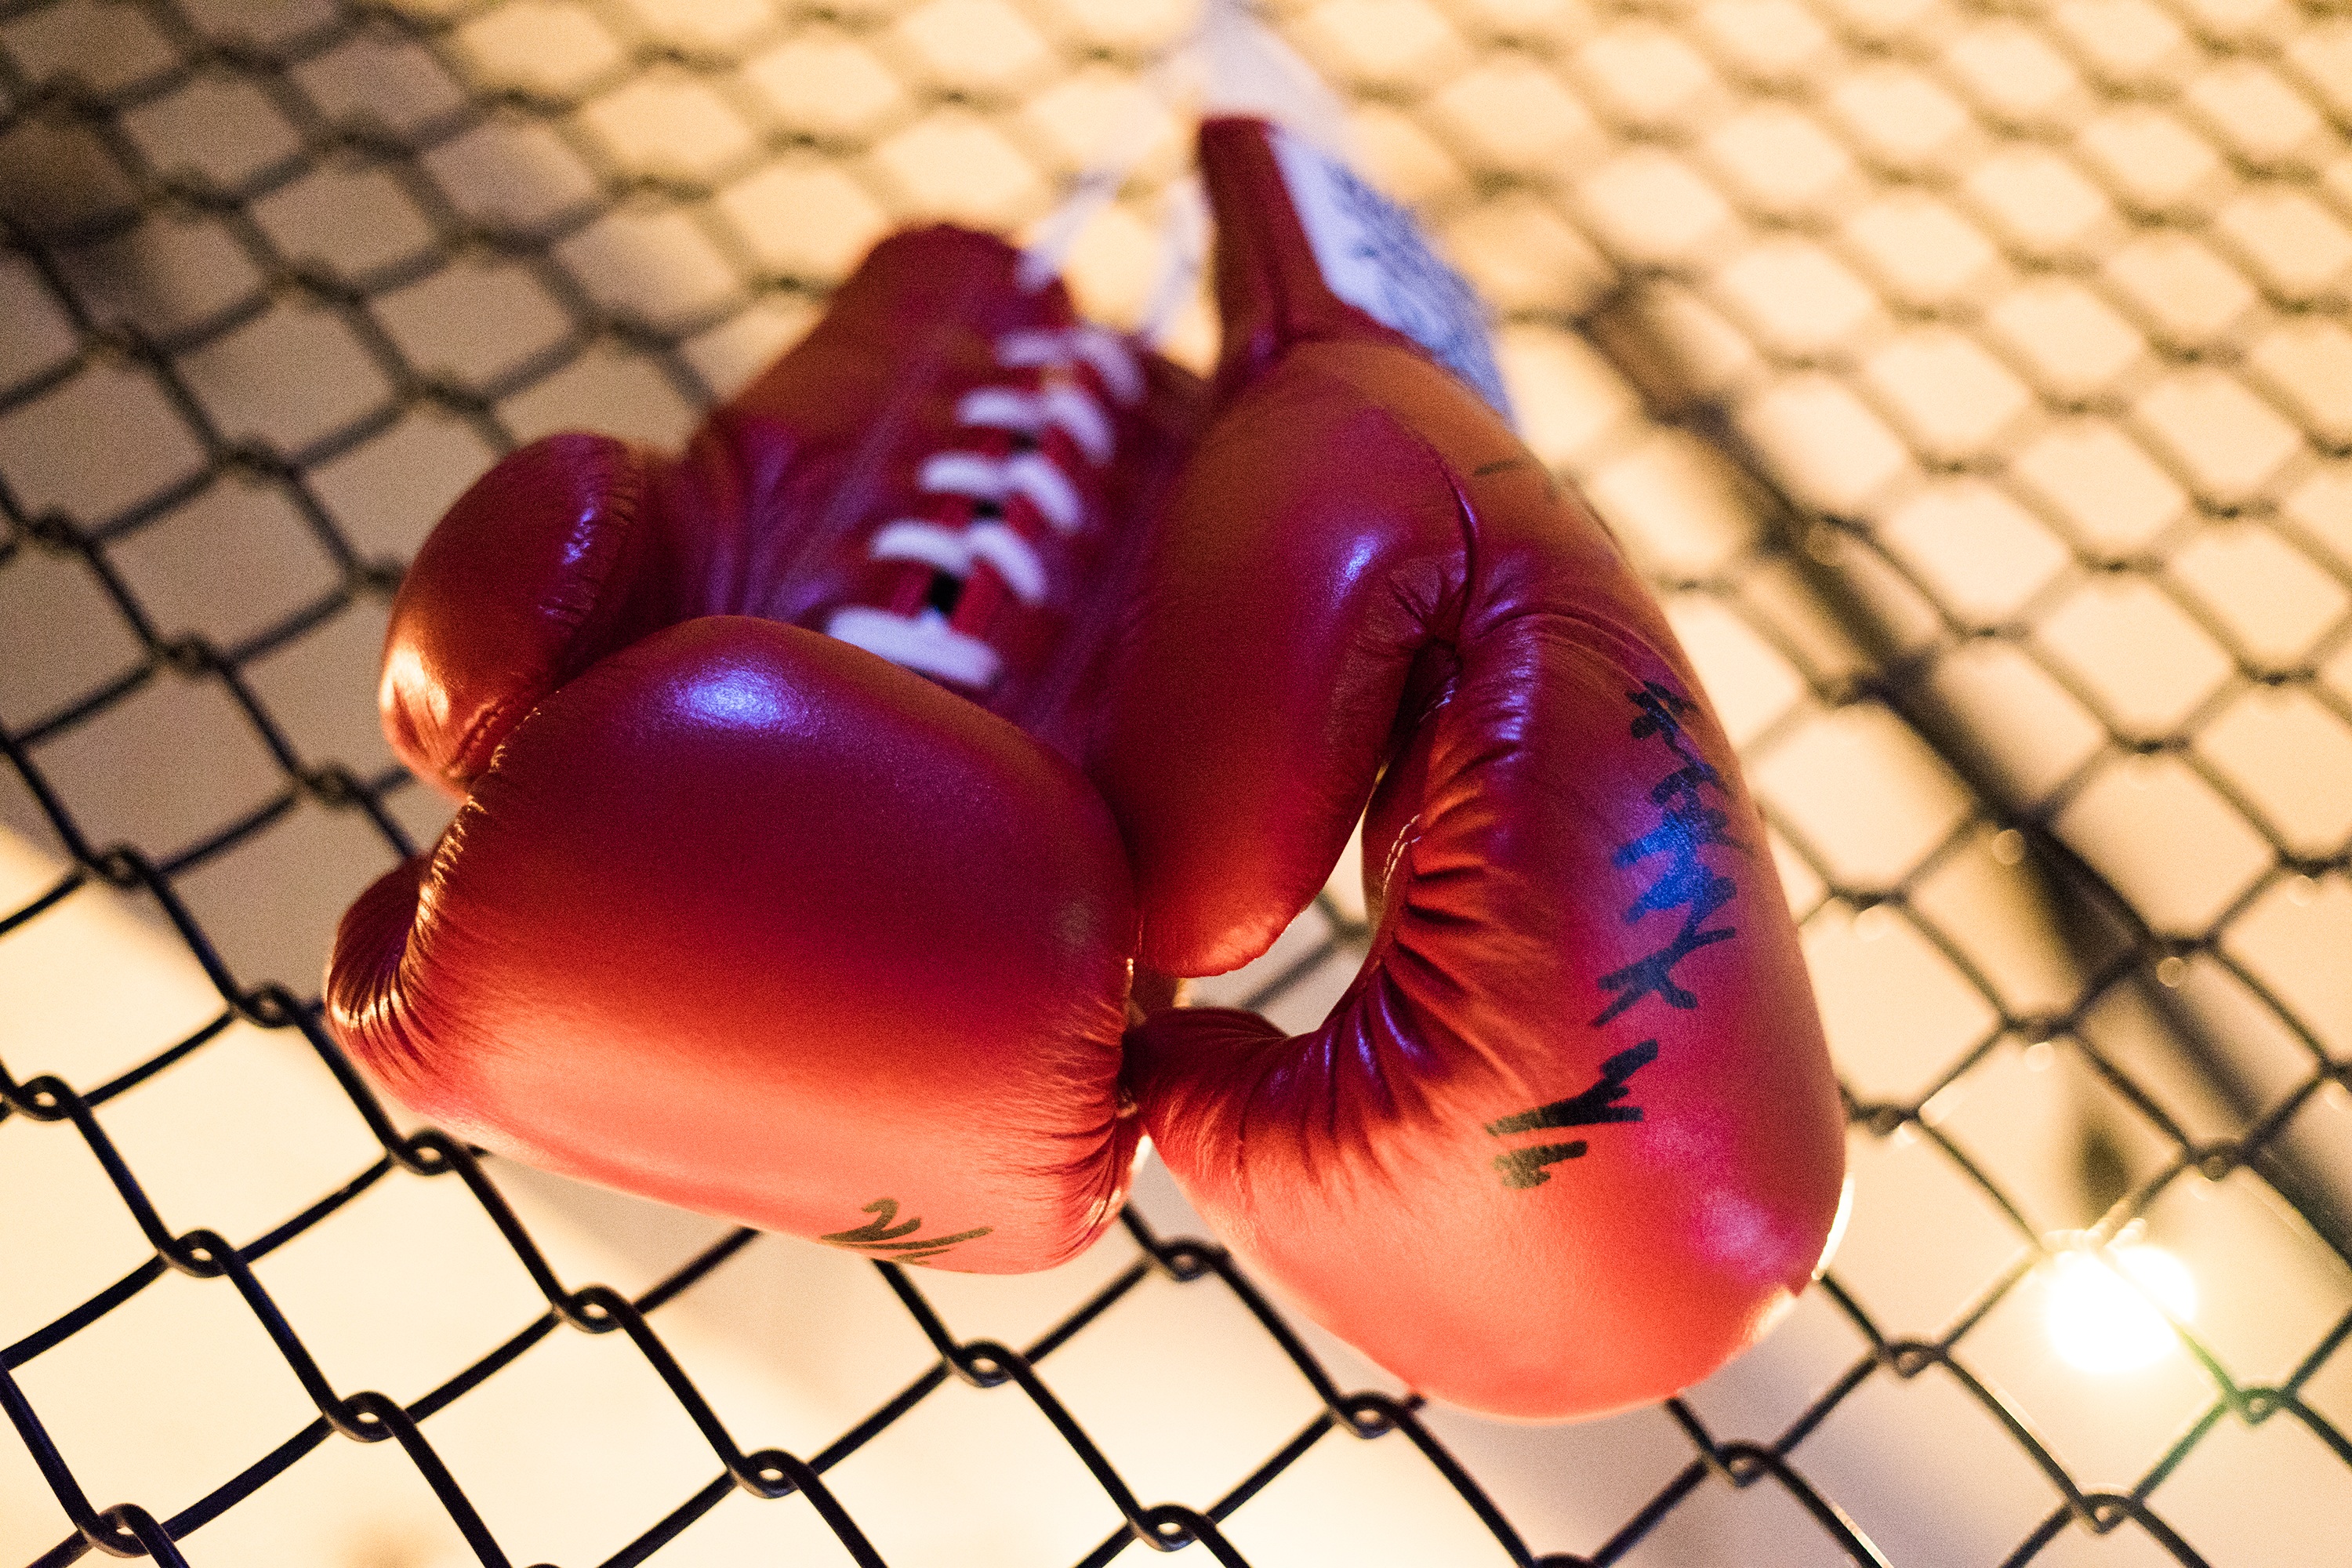 fight, boxing, sports, struggle, boxing gloves